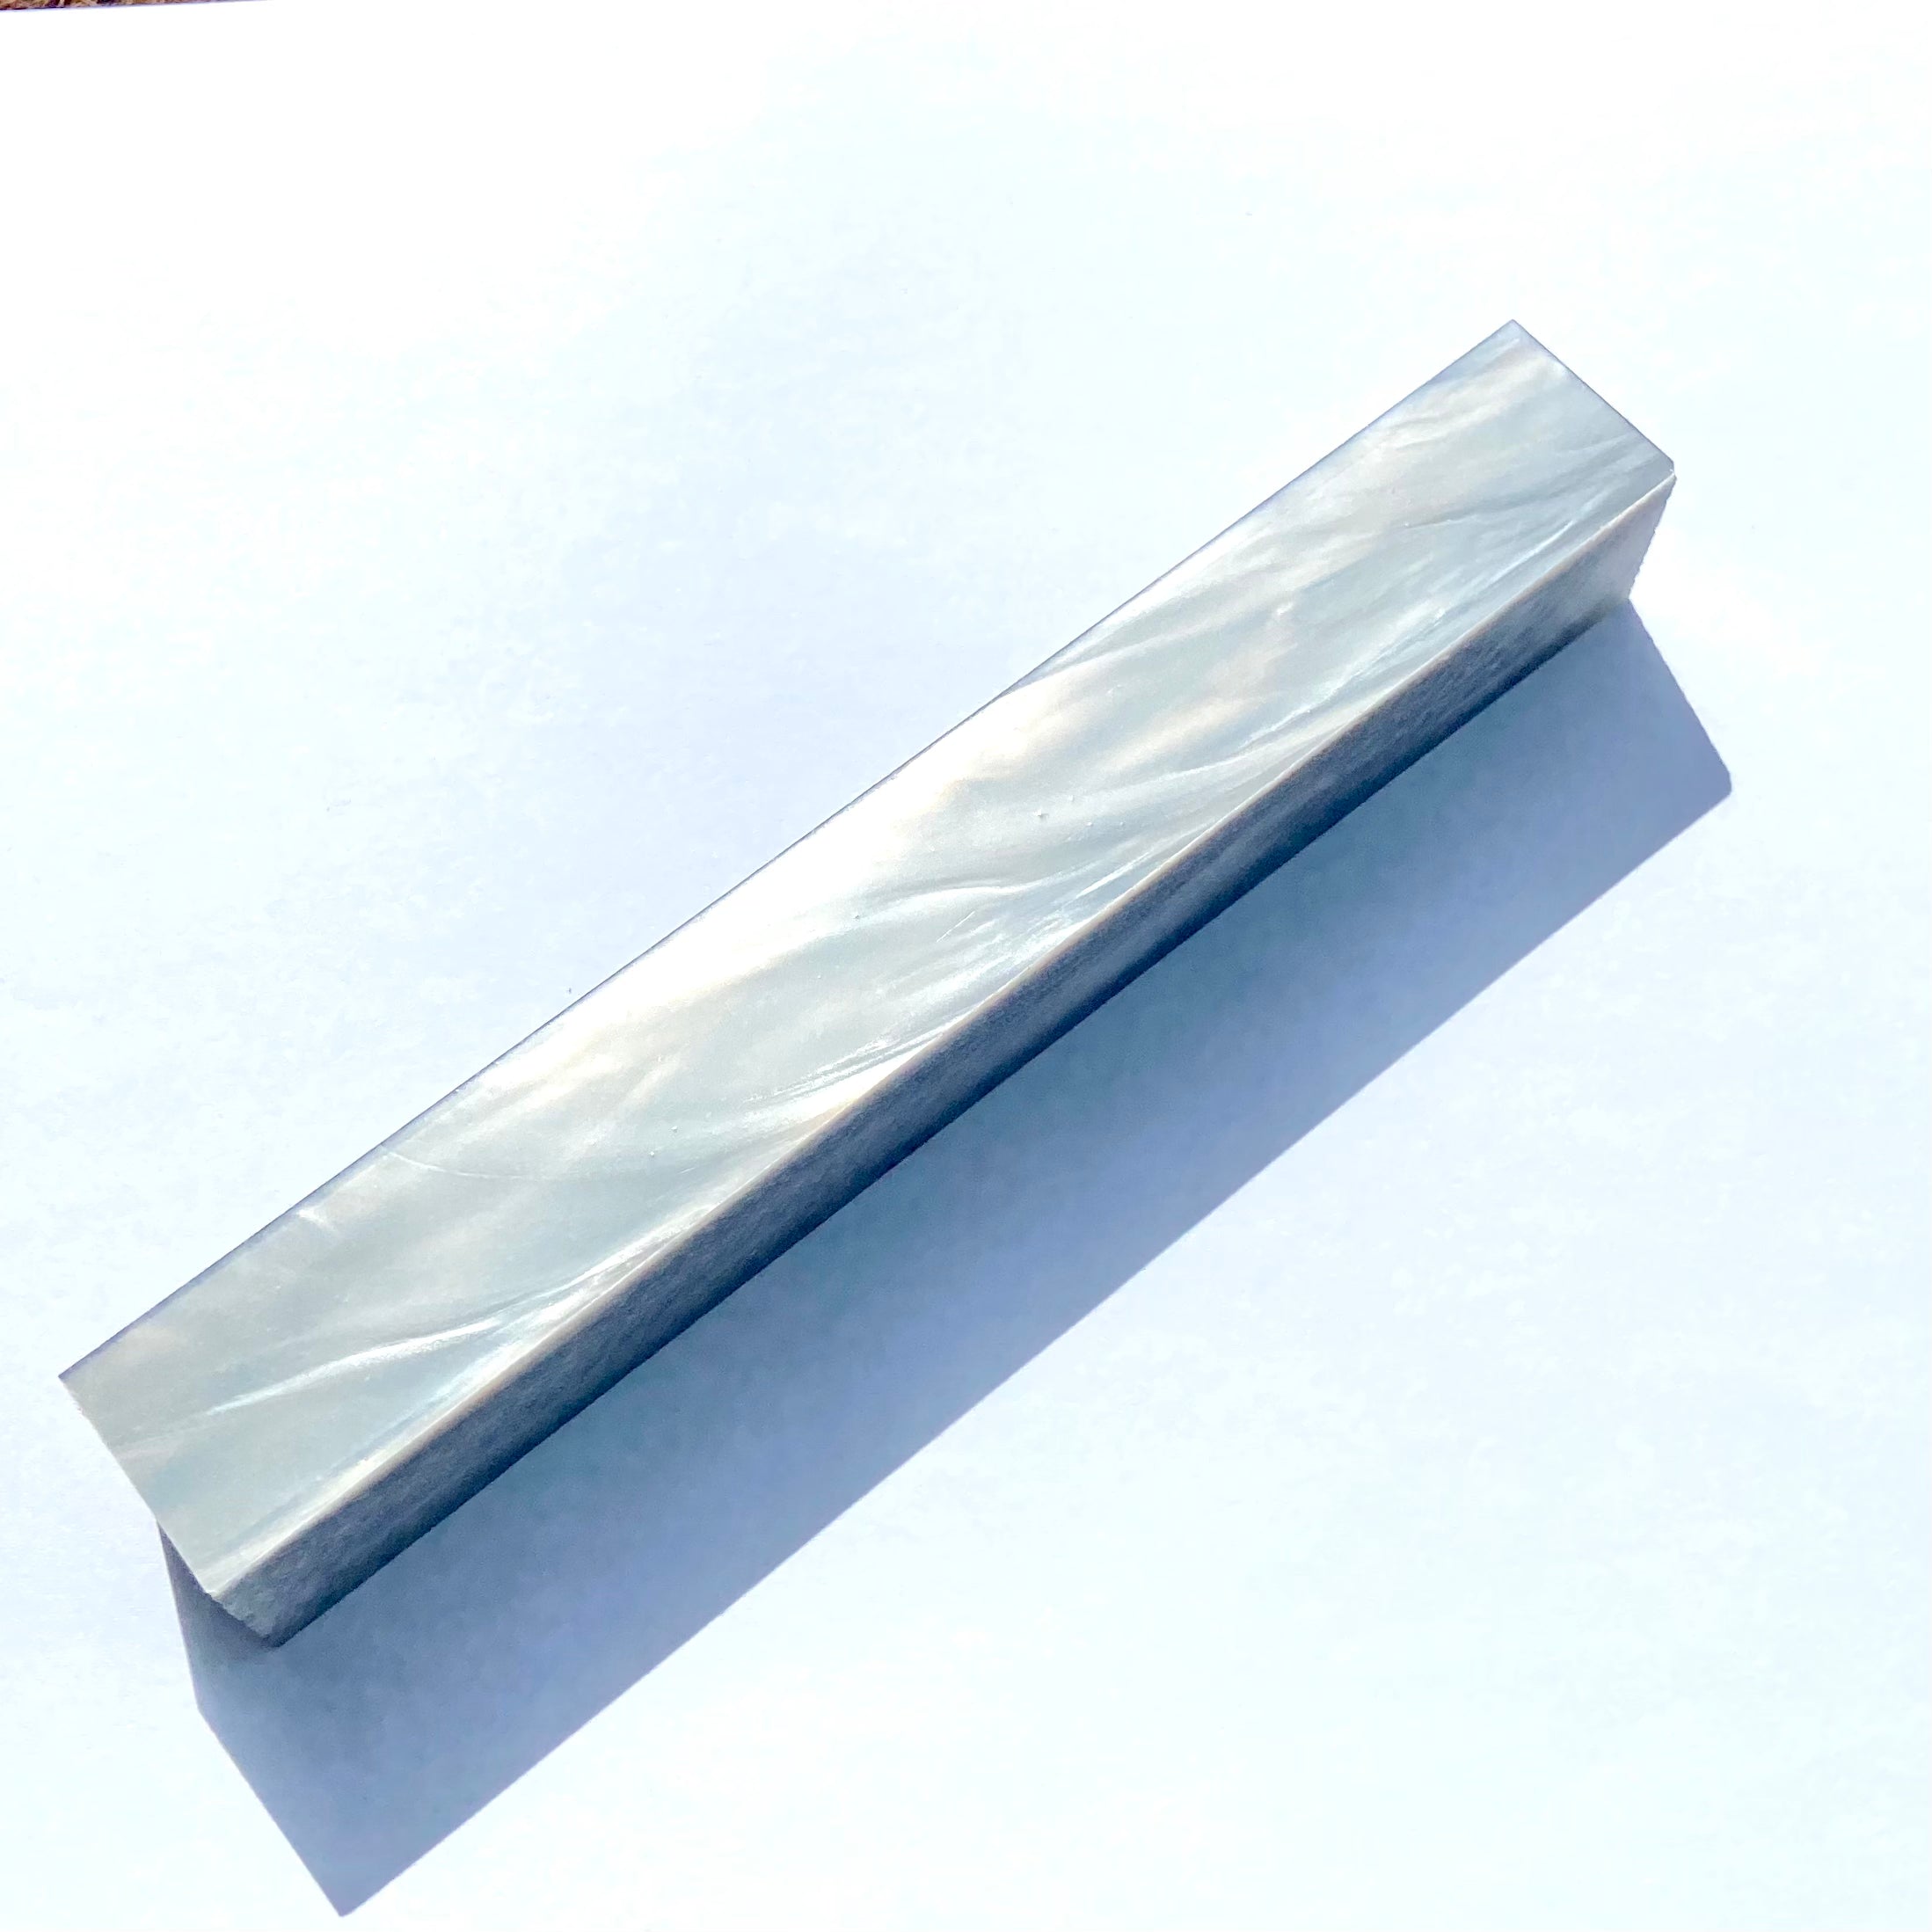 Silver Pearl l Kirinite Pen Blank Pearl Series